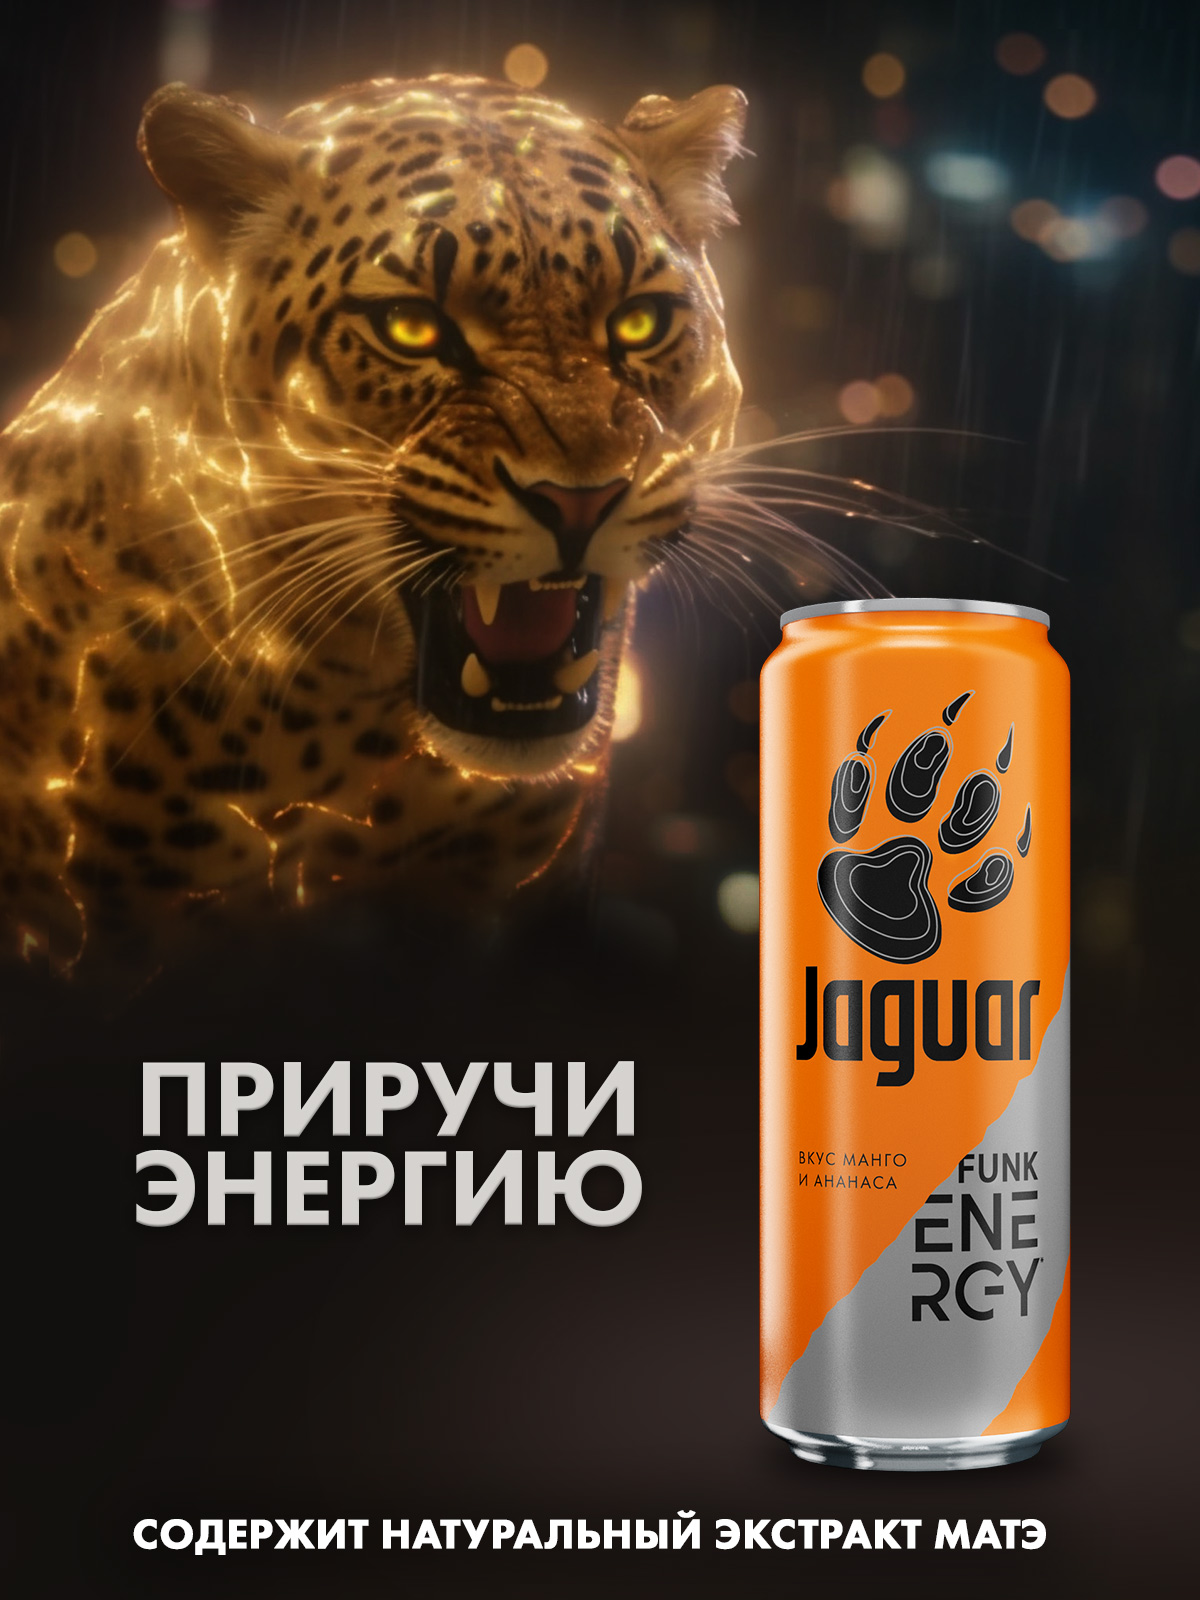 Энергетический напиток Jaguar Funk energy, 0,45 л х 12 шт